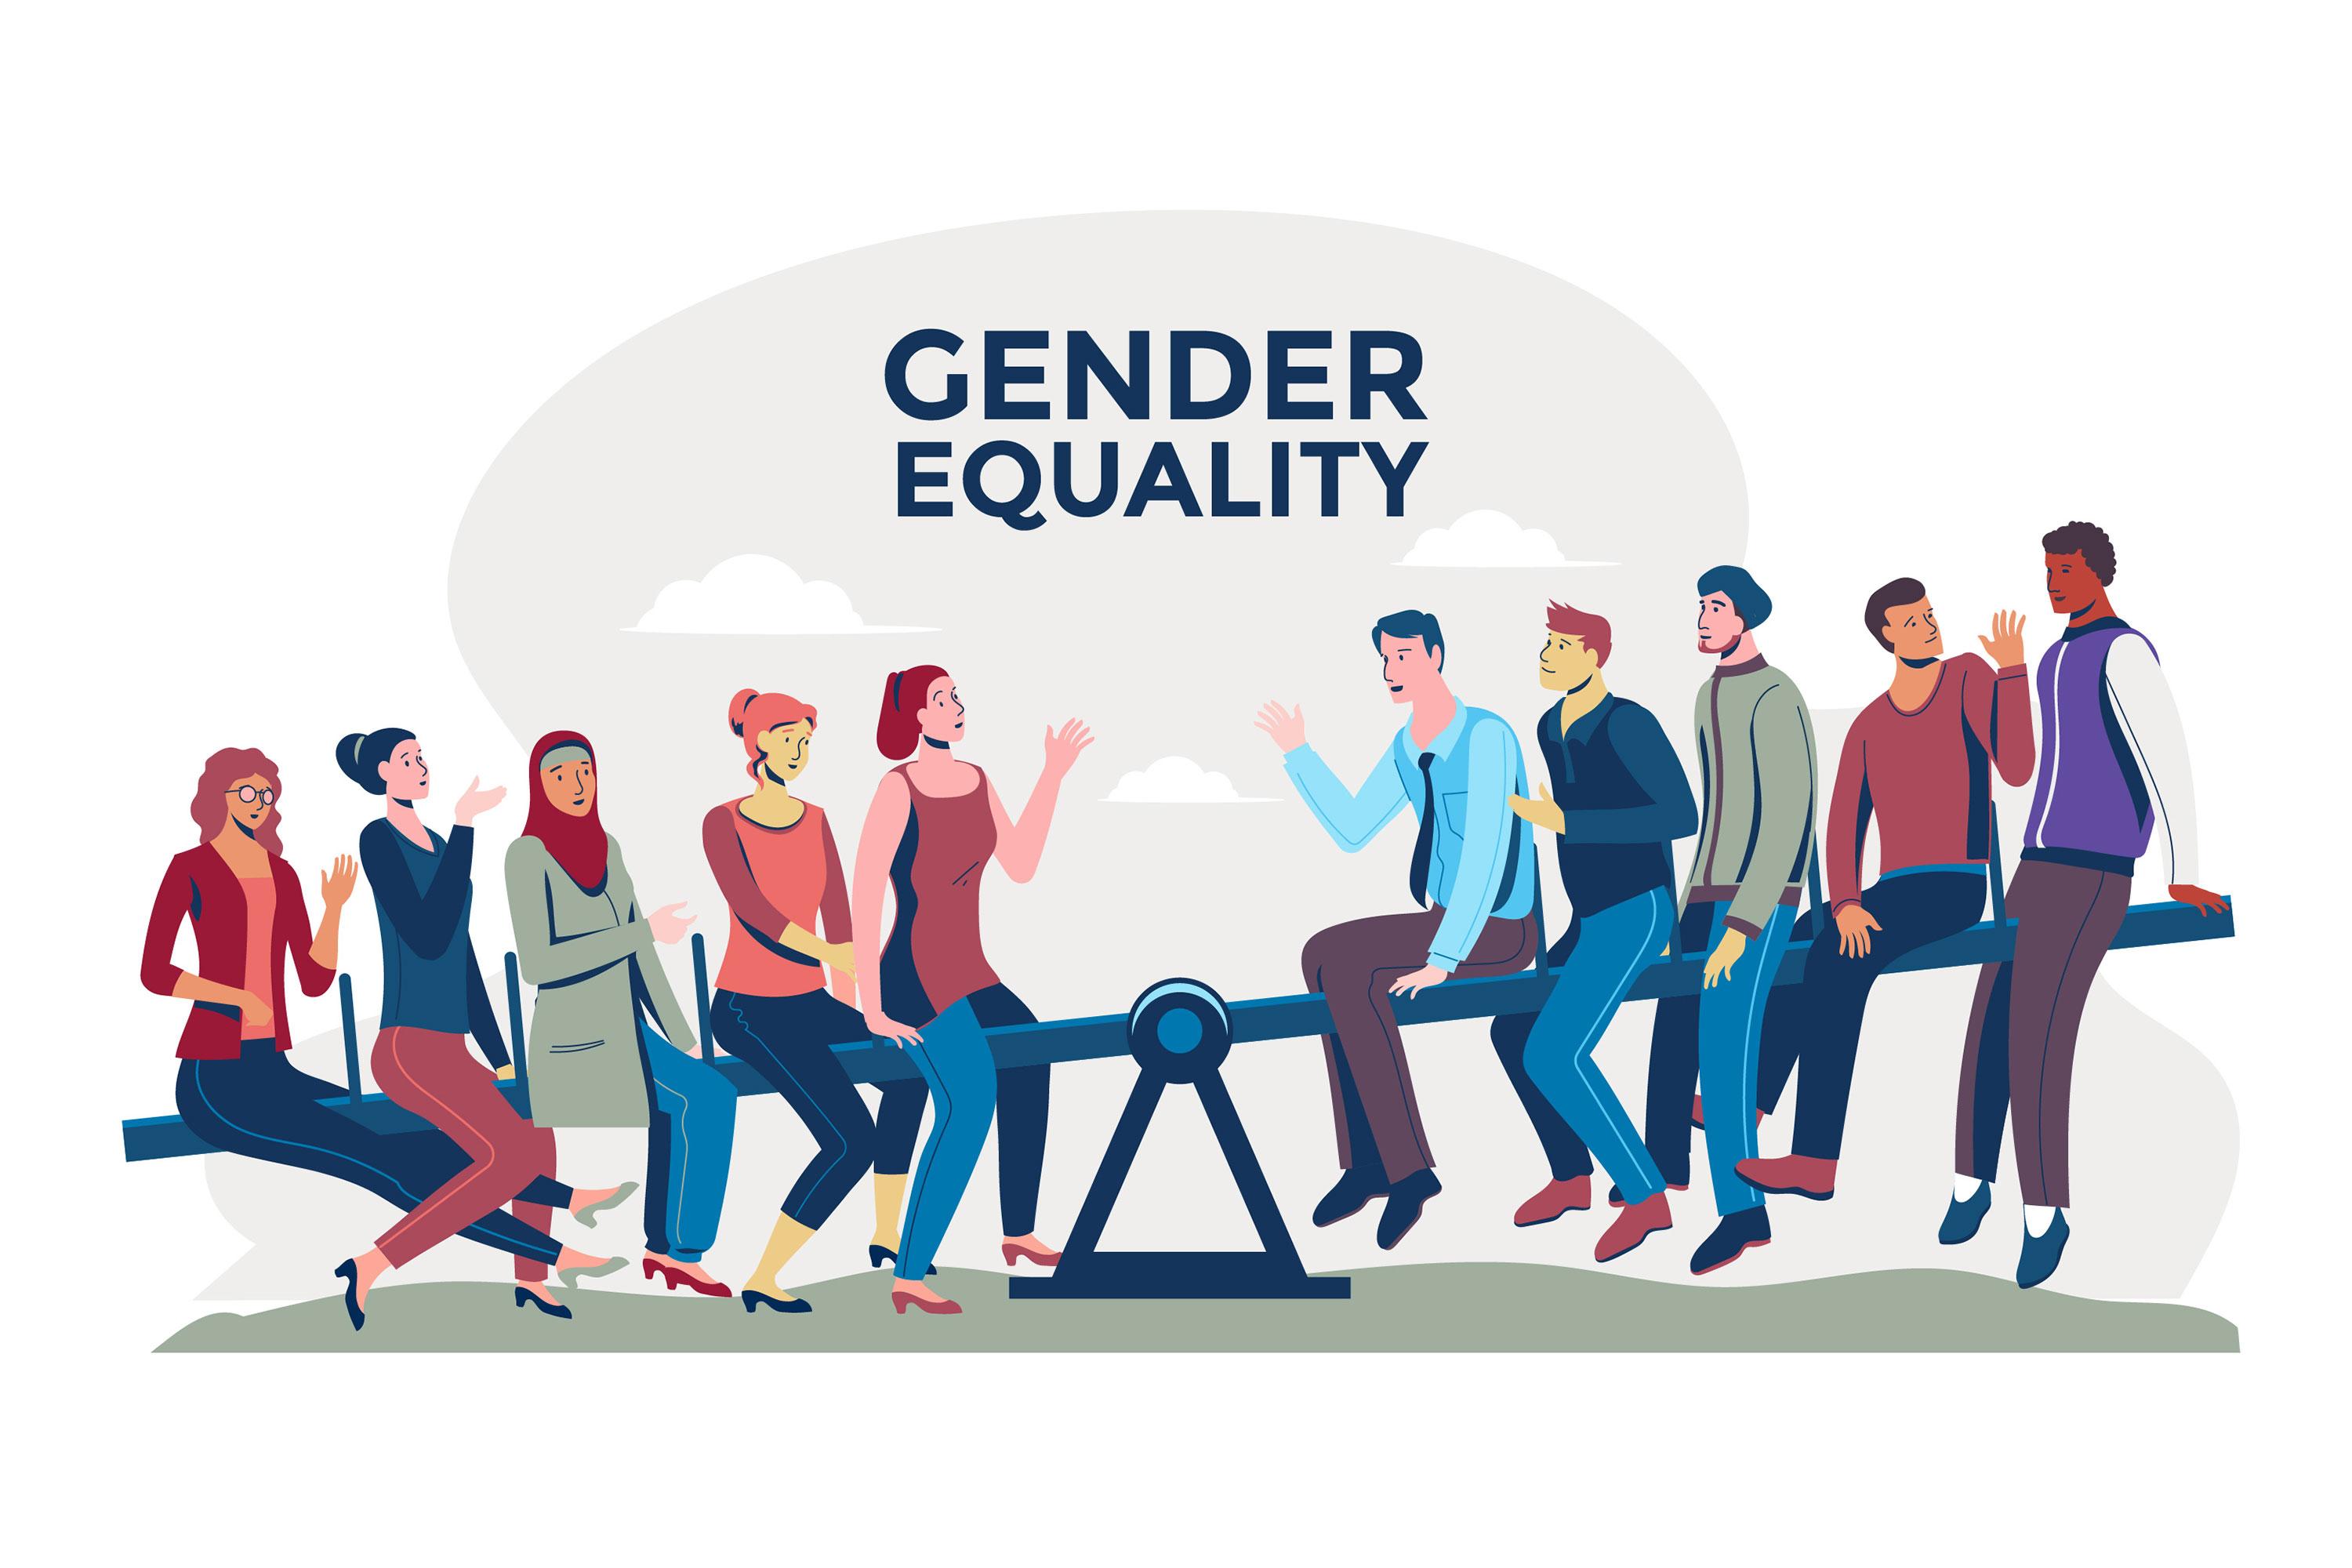 Emphasizing gender equity